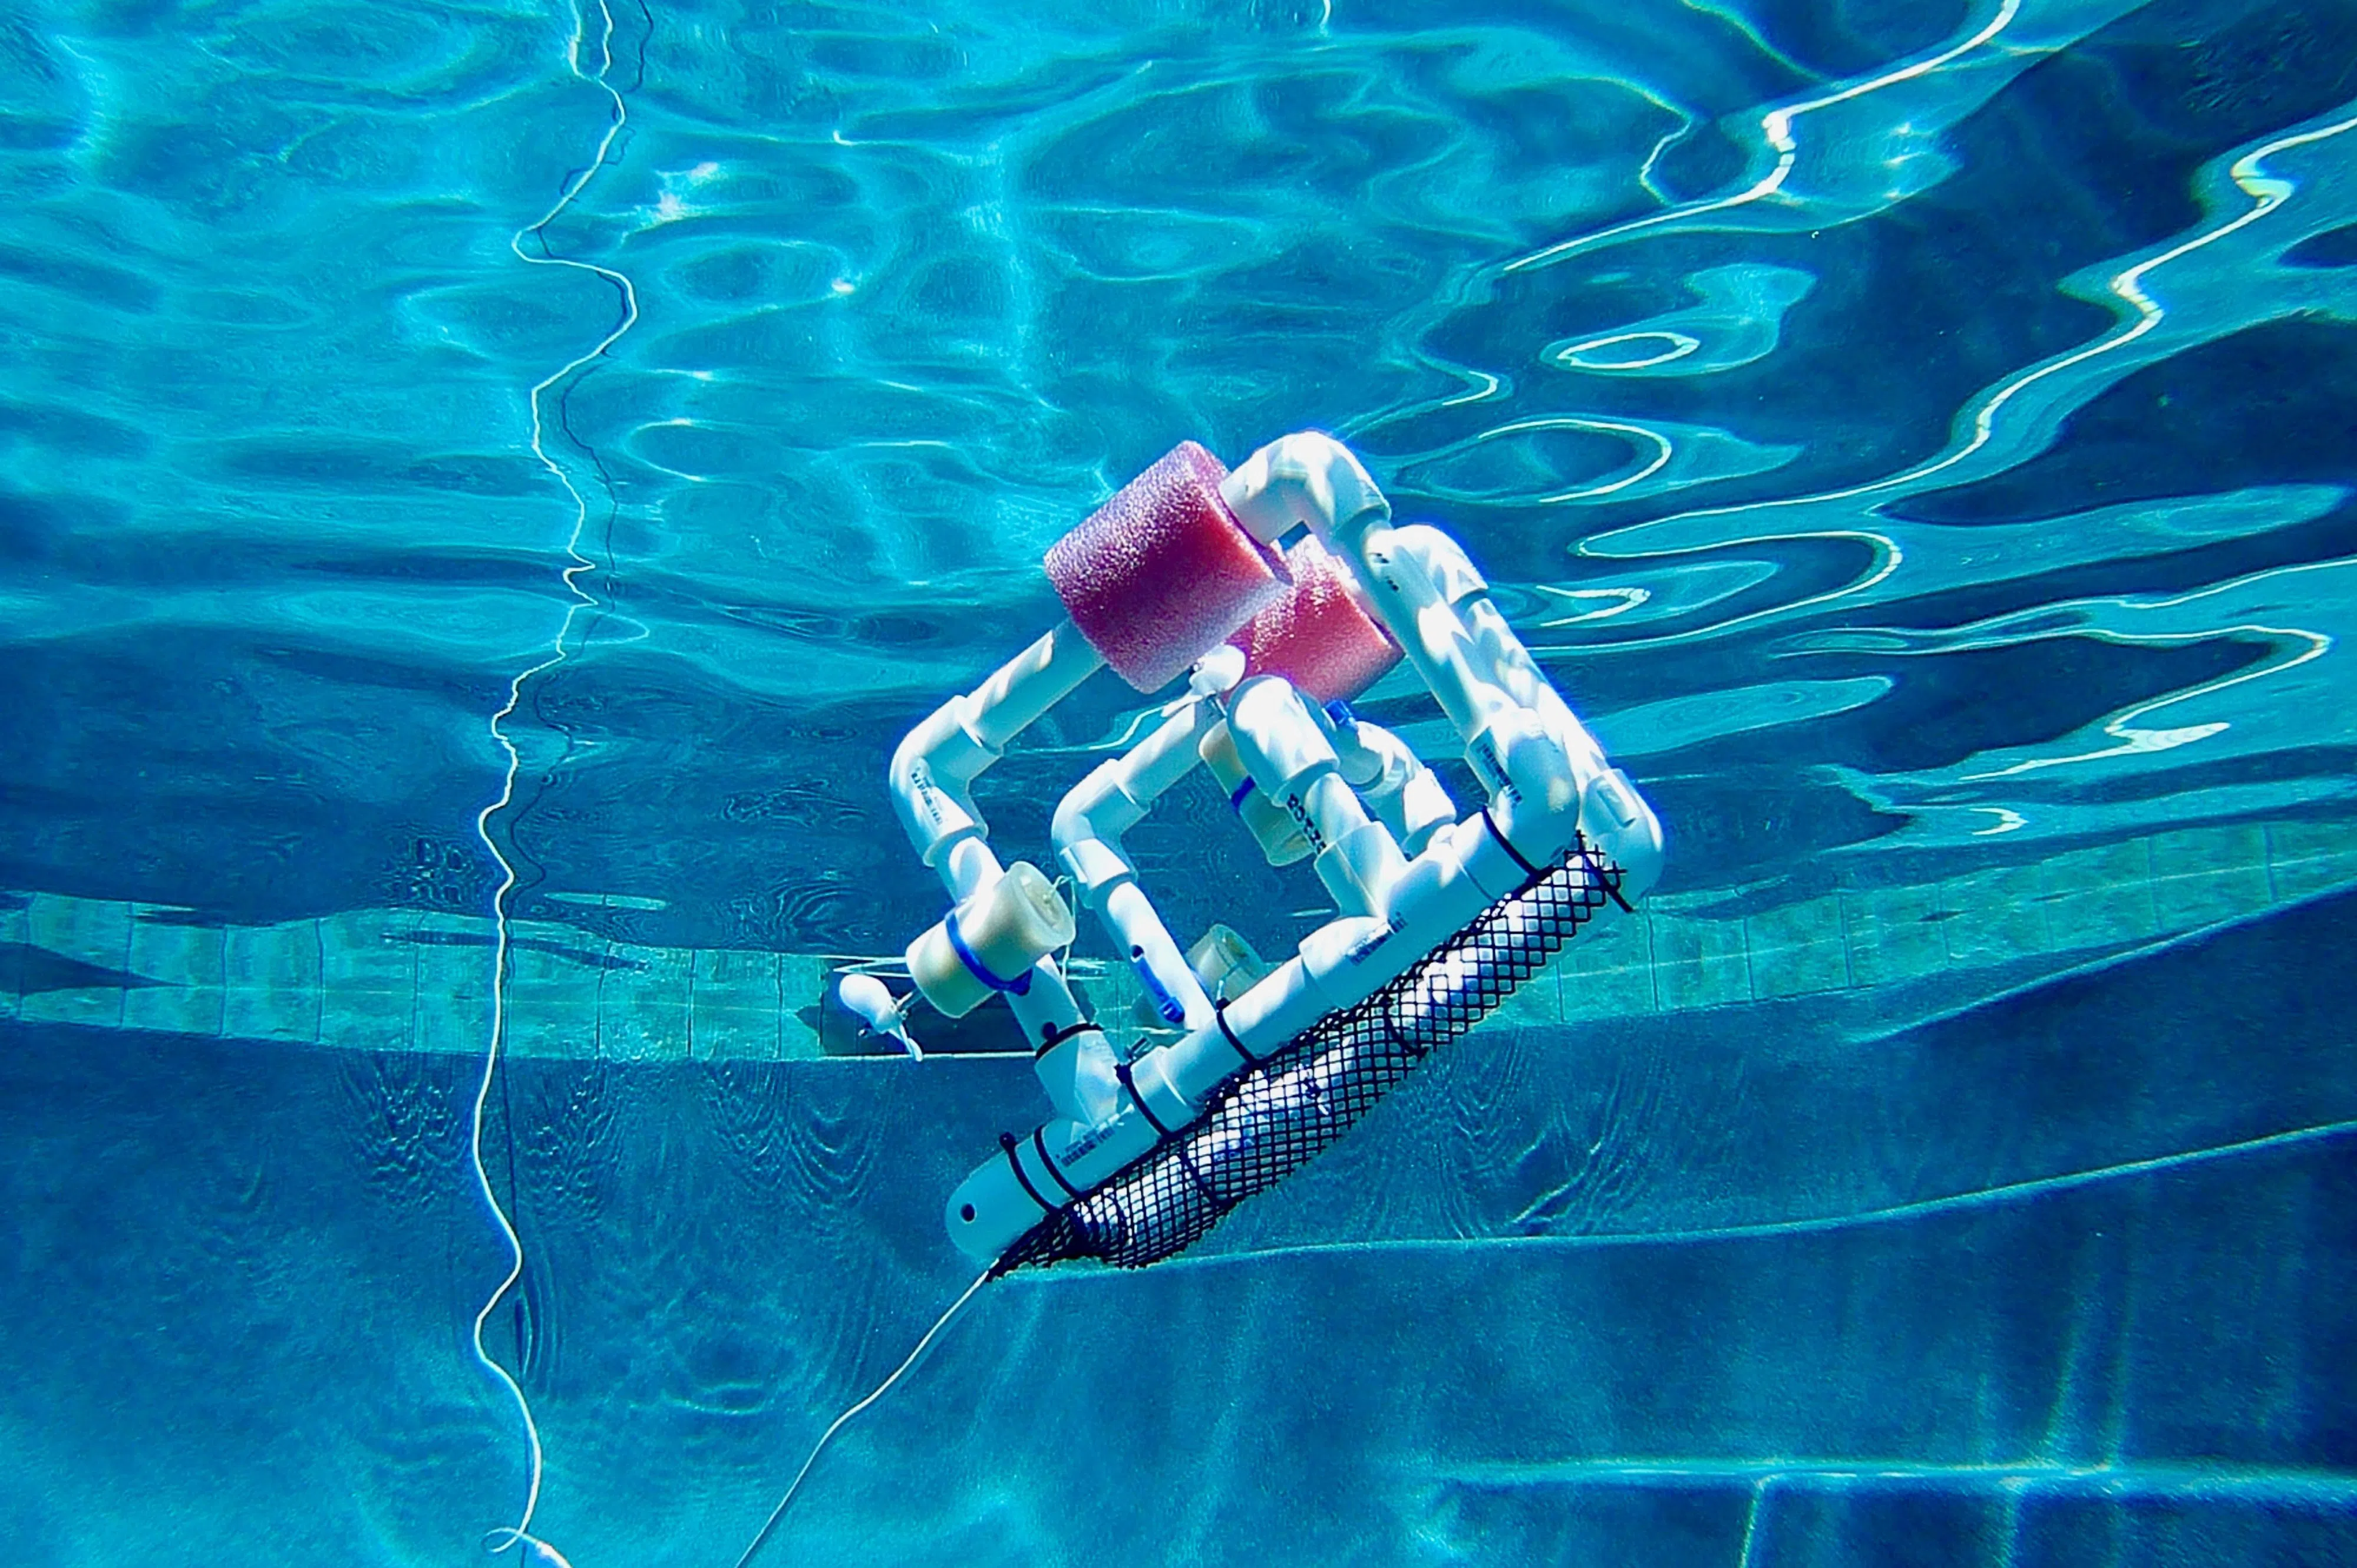 Seaperch Underwater Robotics Competition Coming to Ashwaubenon